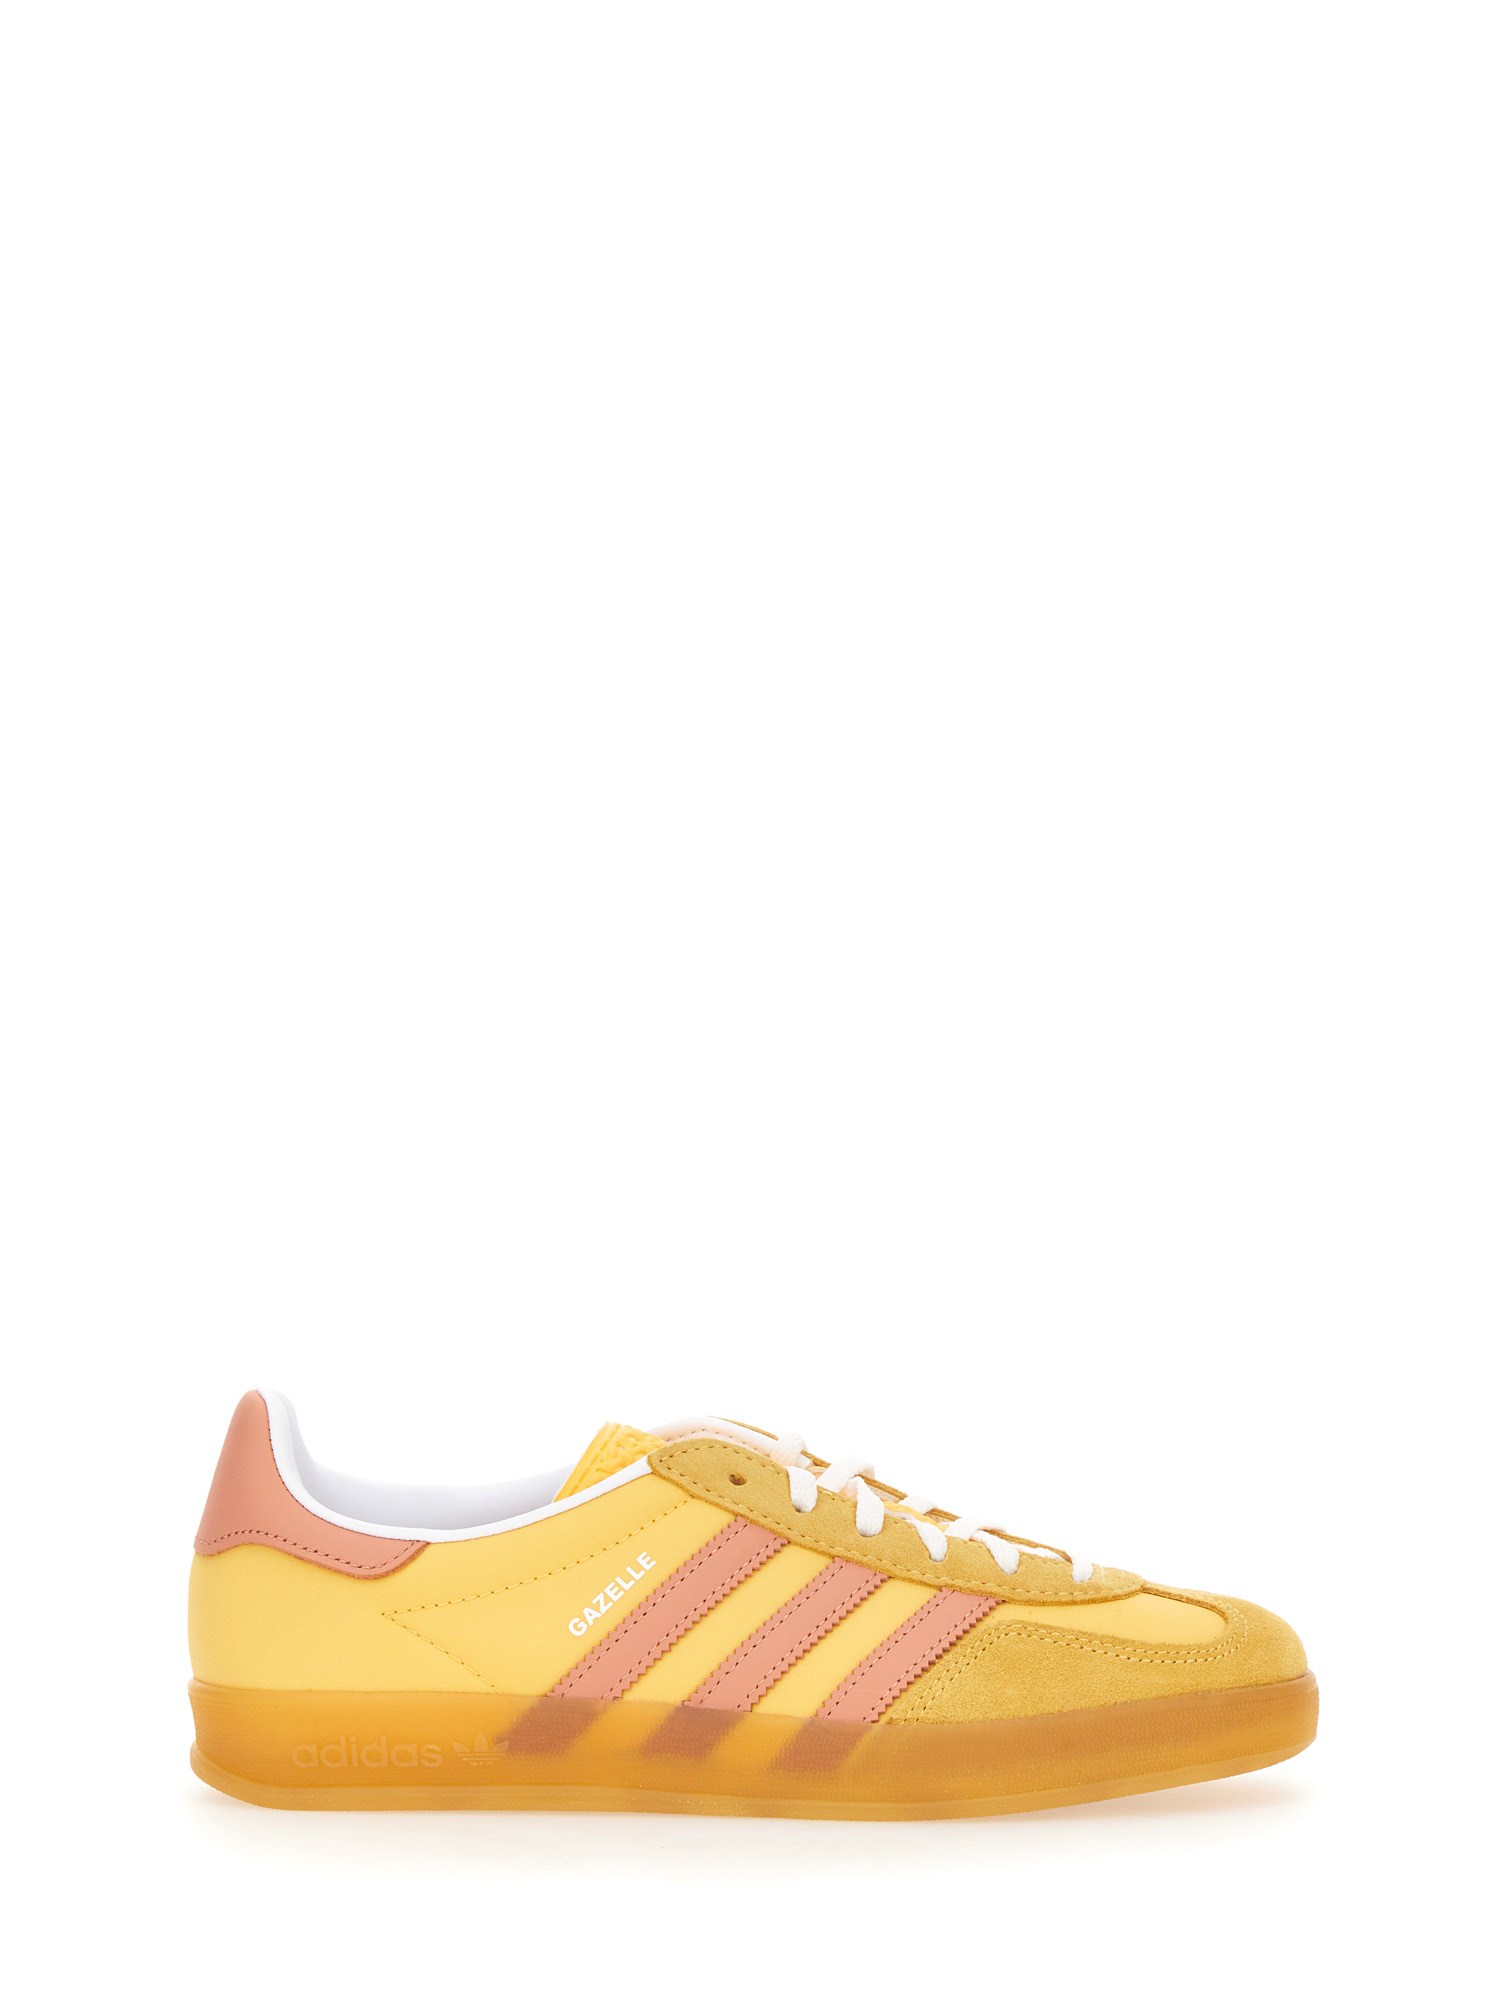 Adidas Originals "gazelle" Sneaker In Yellow